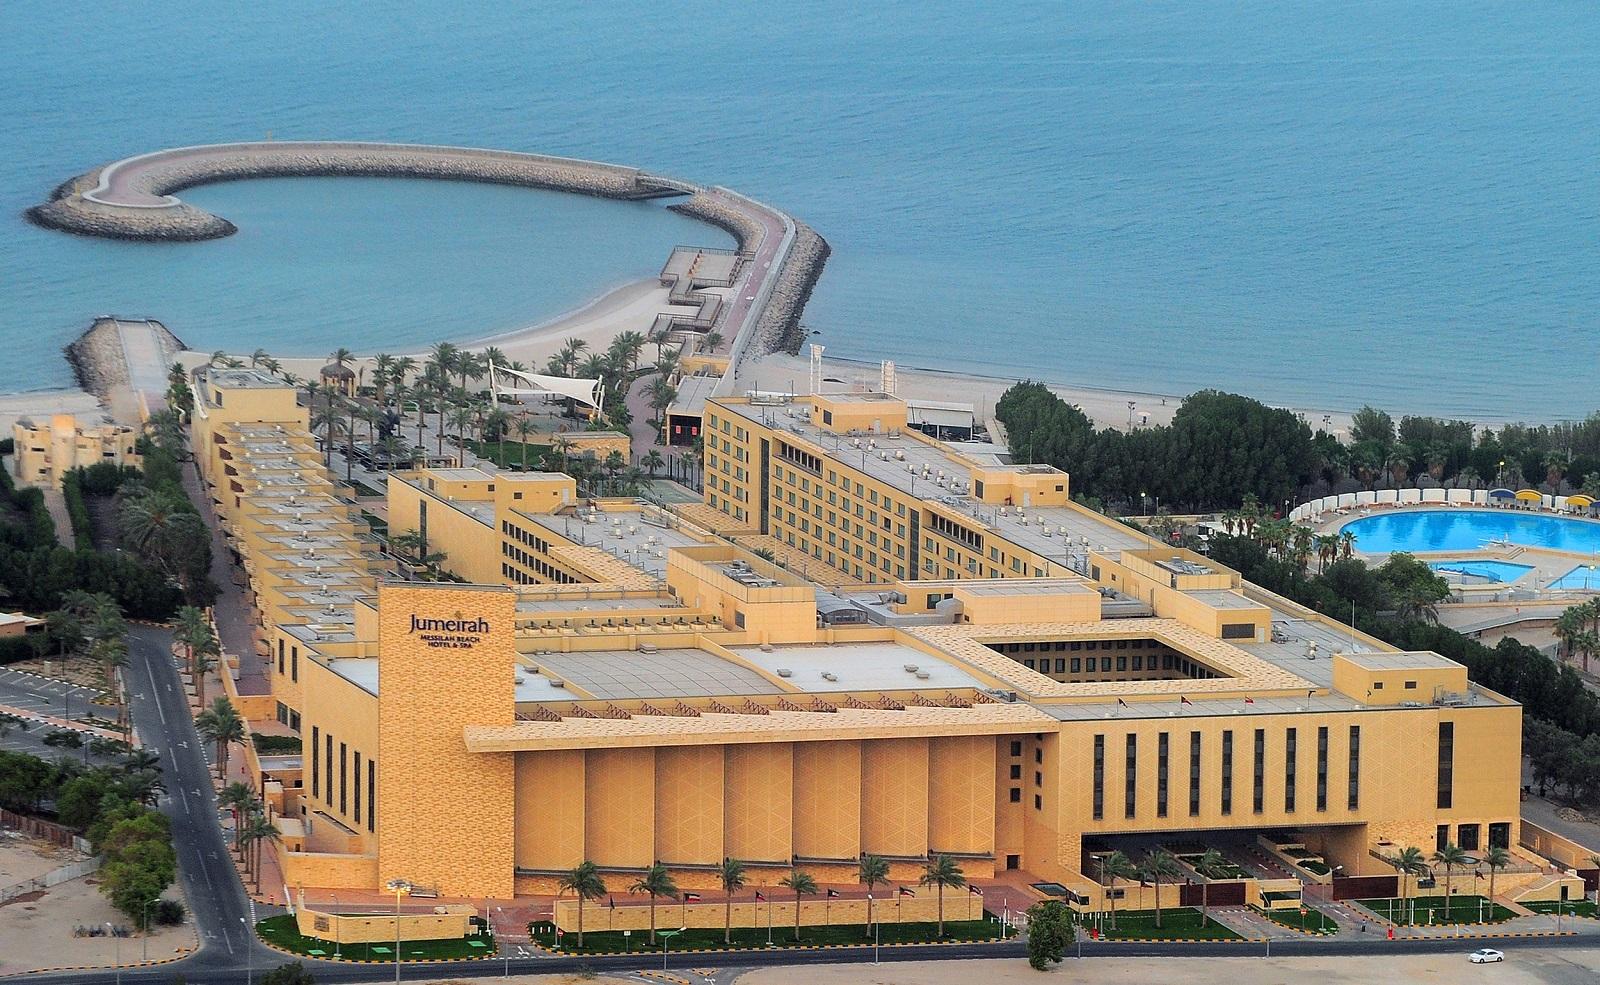 Jumeirah Messilah Beach Hotel & Spa Building